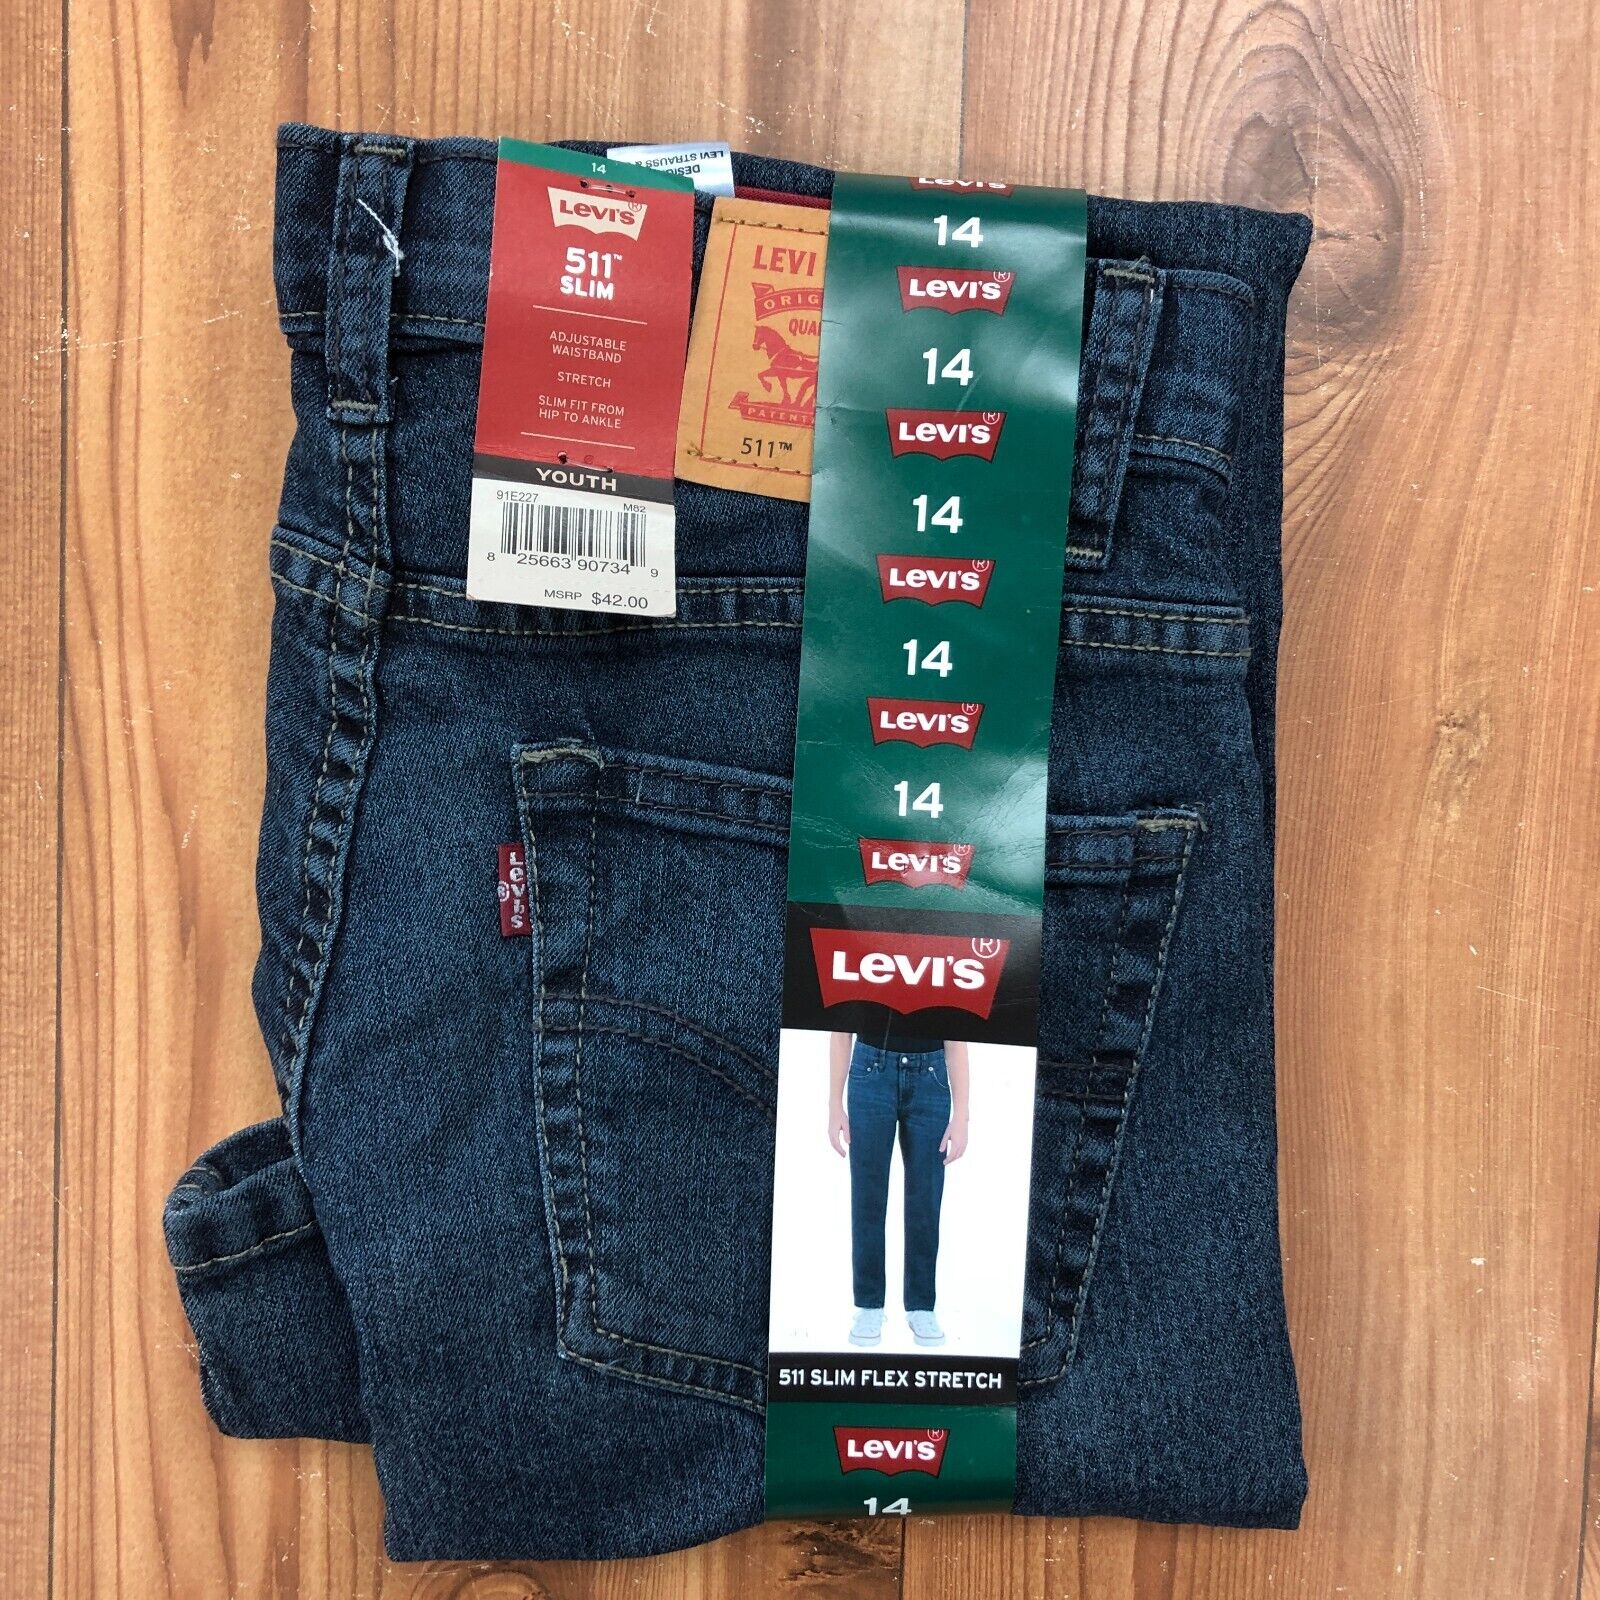 NEW Levis Blue 511 Slim Fit Stretch Adjustable Waist Denim Jeans Youth Size 14